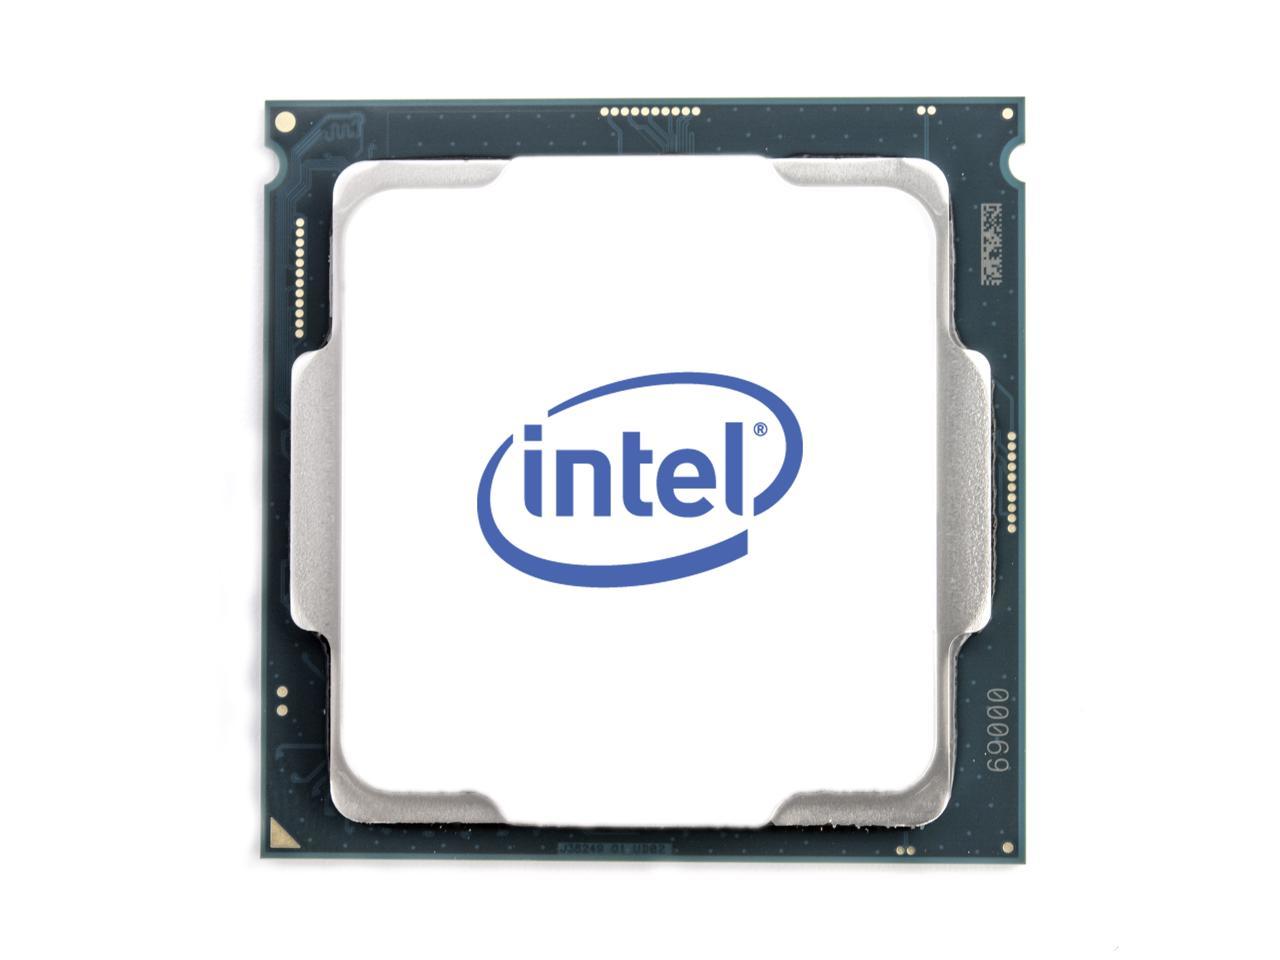 Intel Pentium Gold G5420 Coffee Lake Dual-Core, 4-Thread, 3.8 GHz LGA 1151 (300 Series) 54W BX80684G5420 Desktop Processor Intel UHD Graphics 610